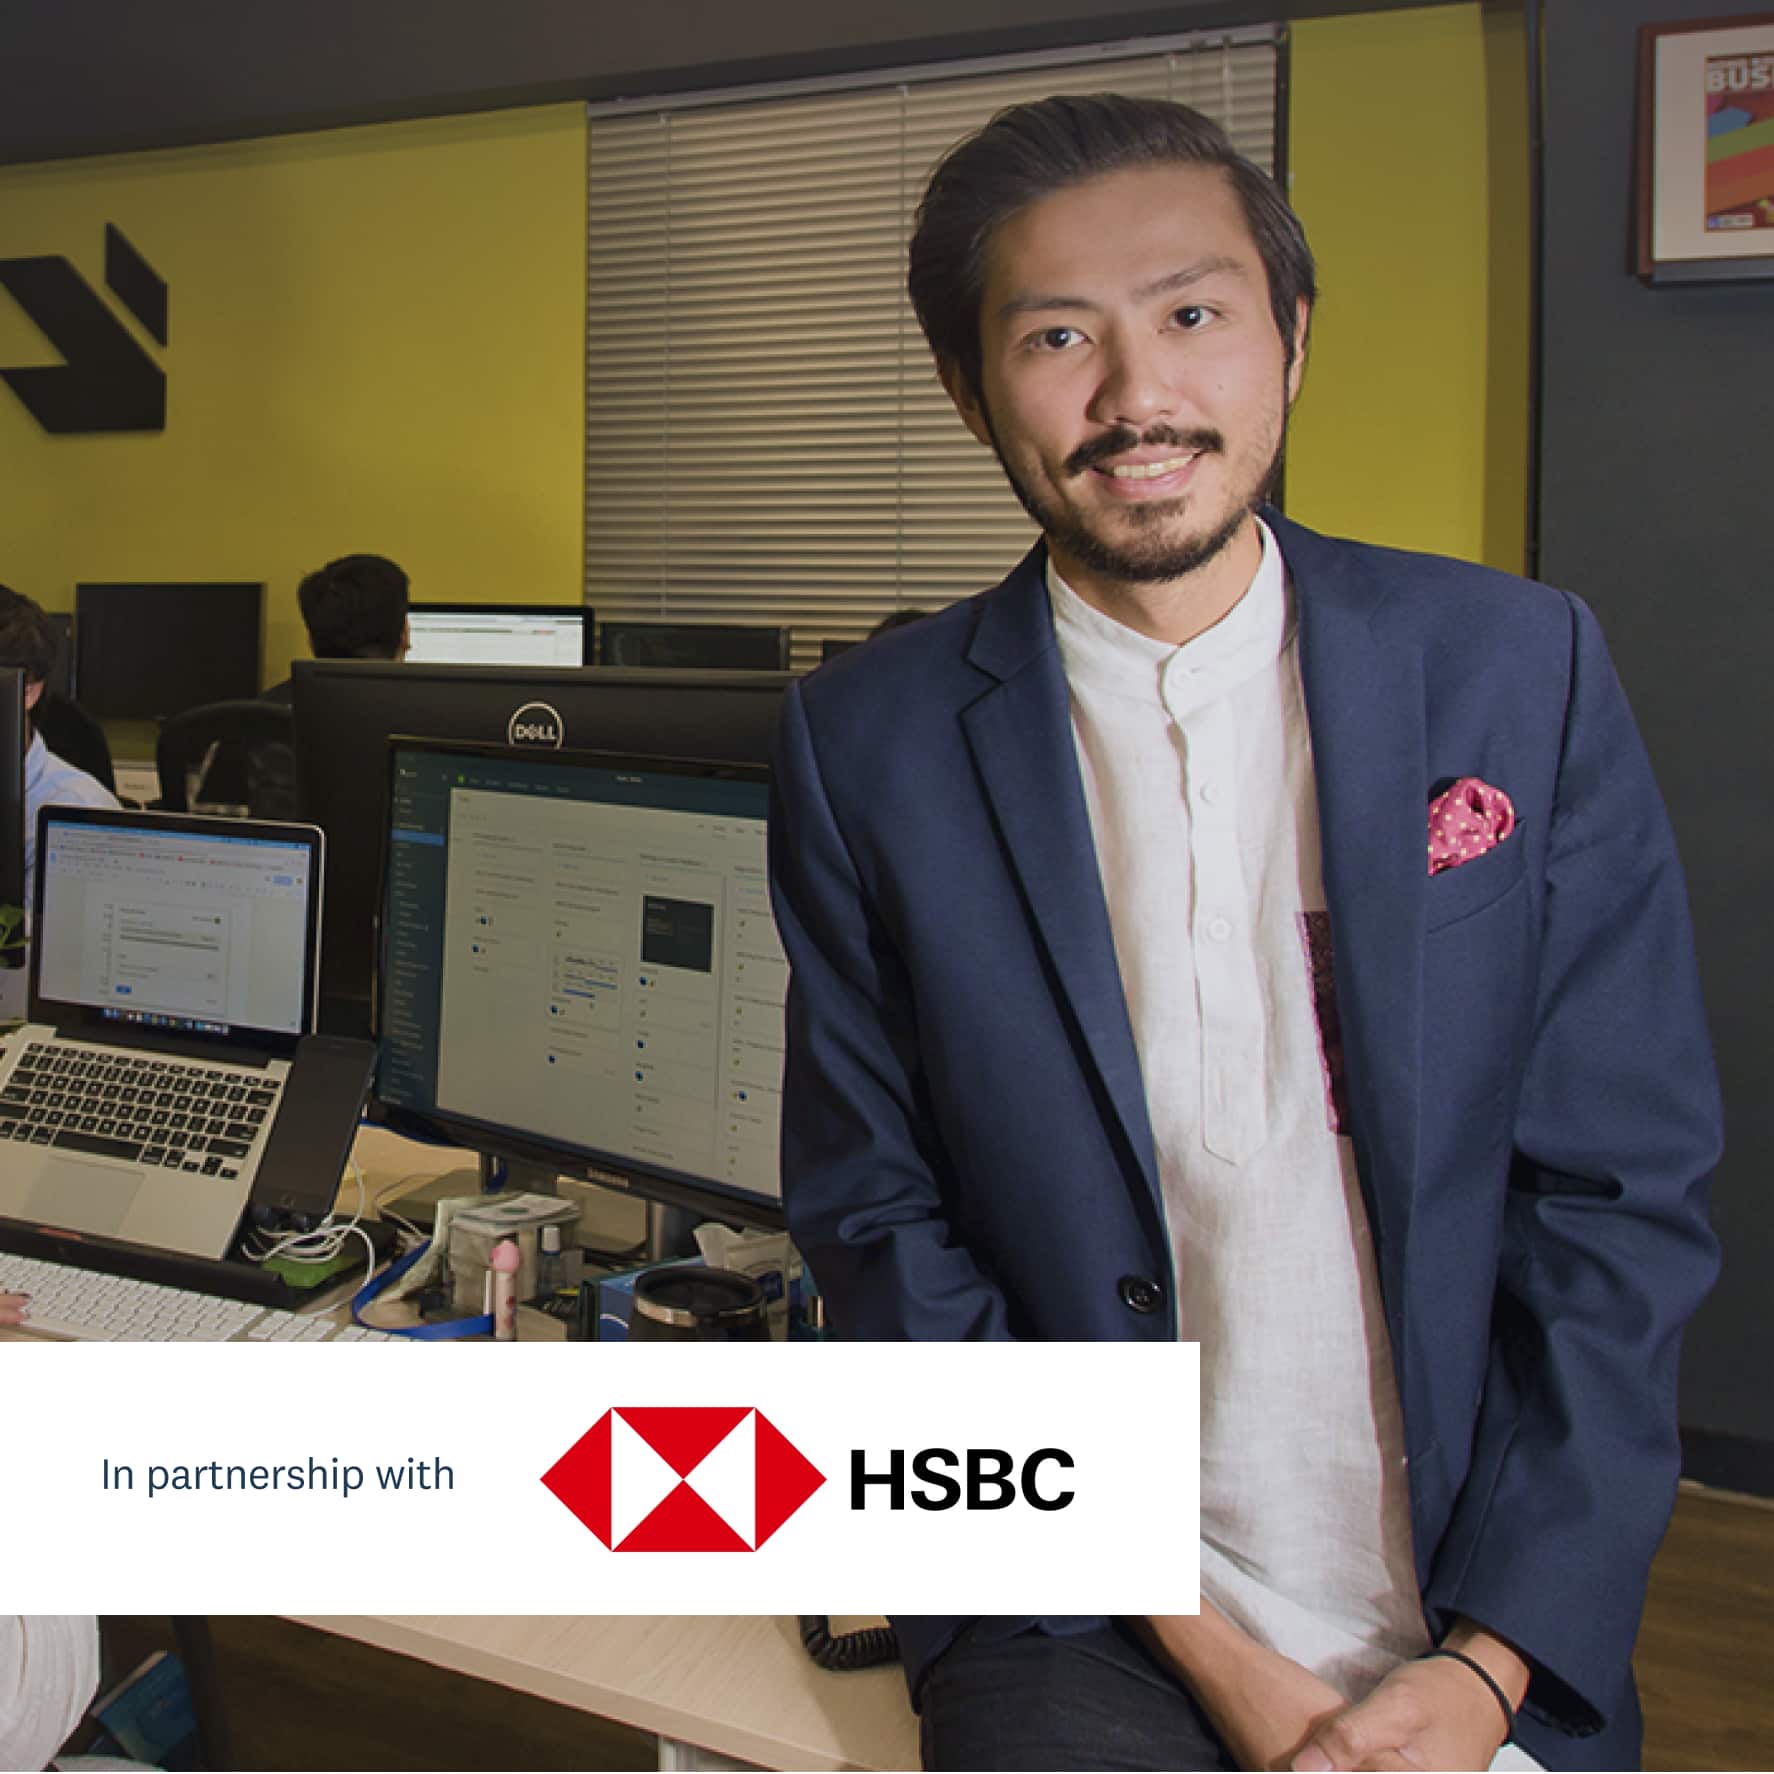 Xero in partnership with HSBC